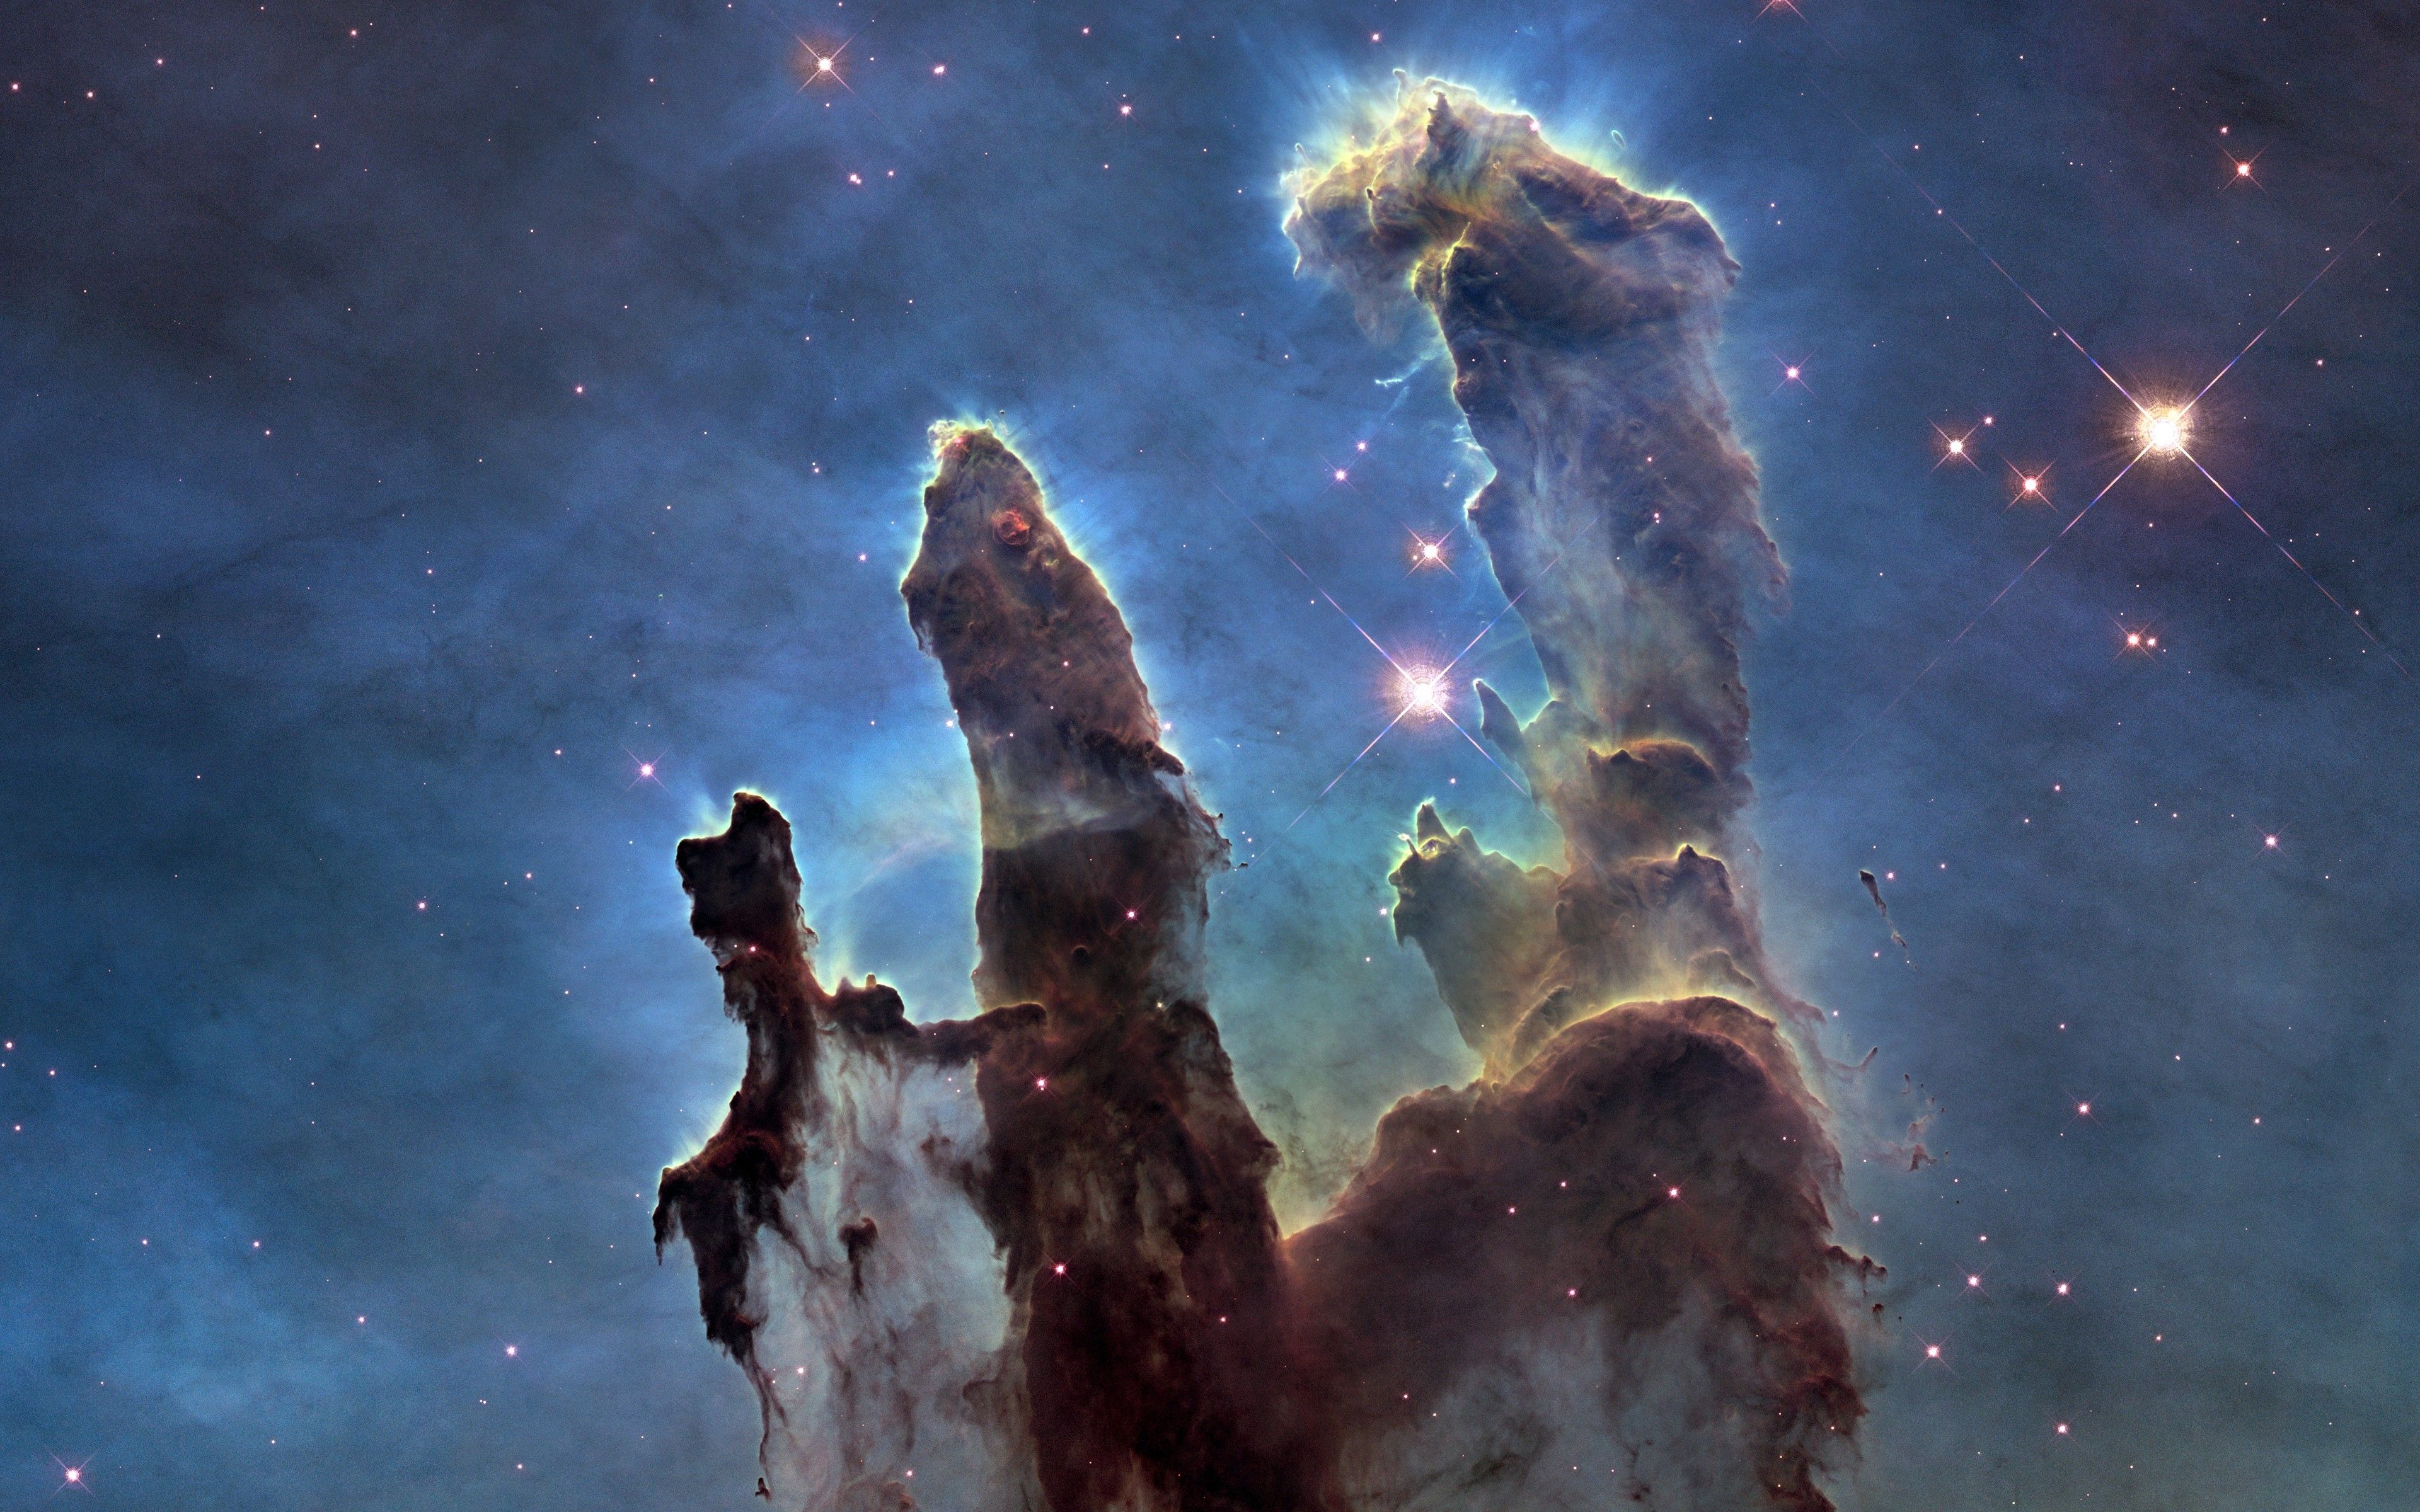 Wallpaper, 3840x2400 px, nebula, Pillars of Creation, space, stars